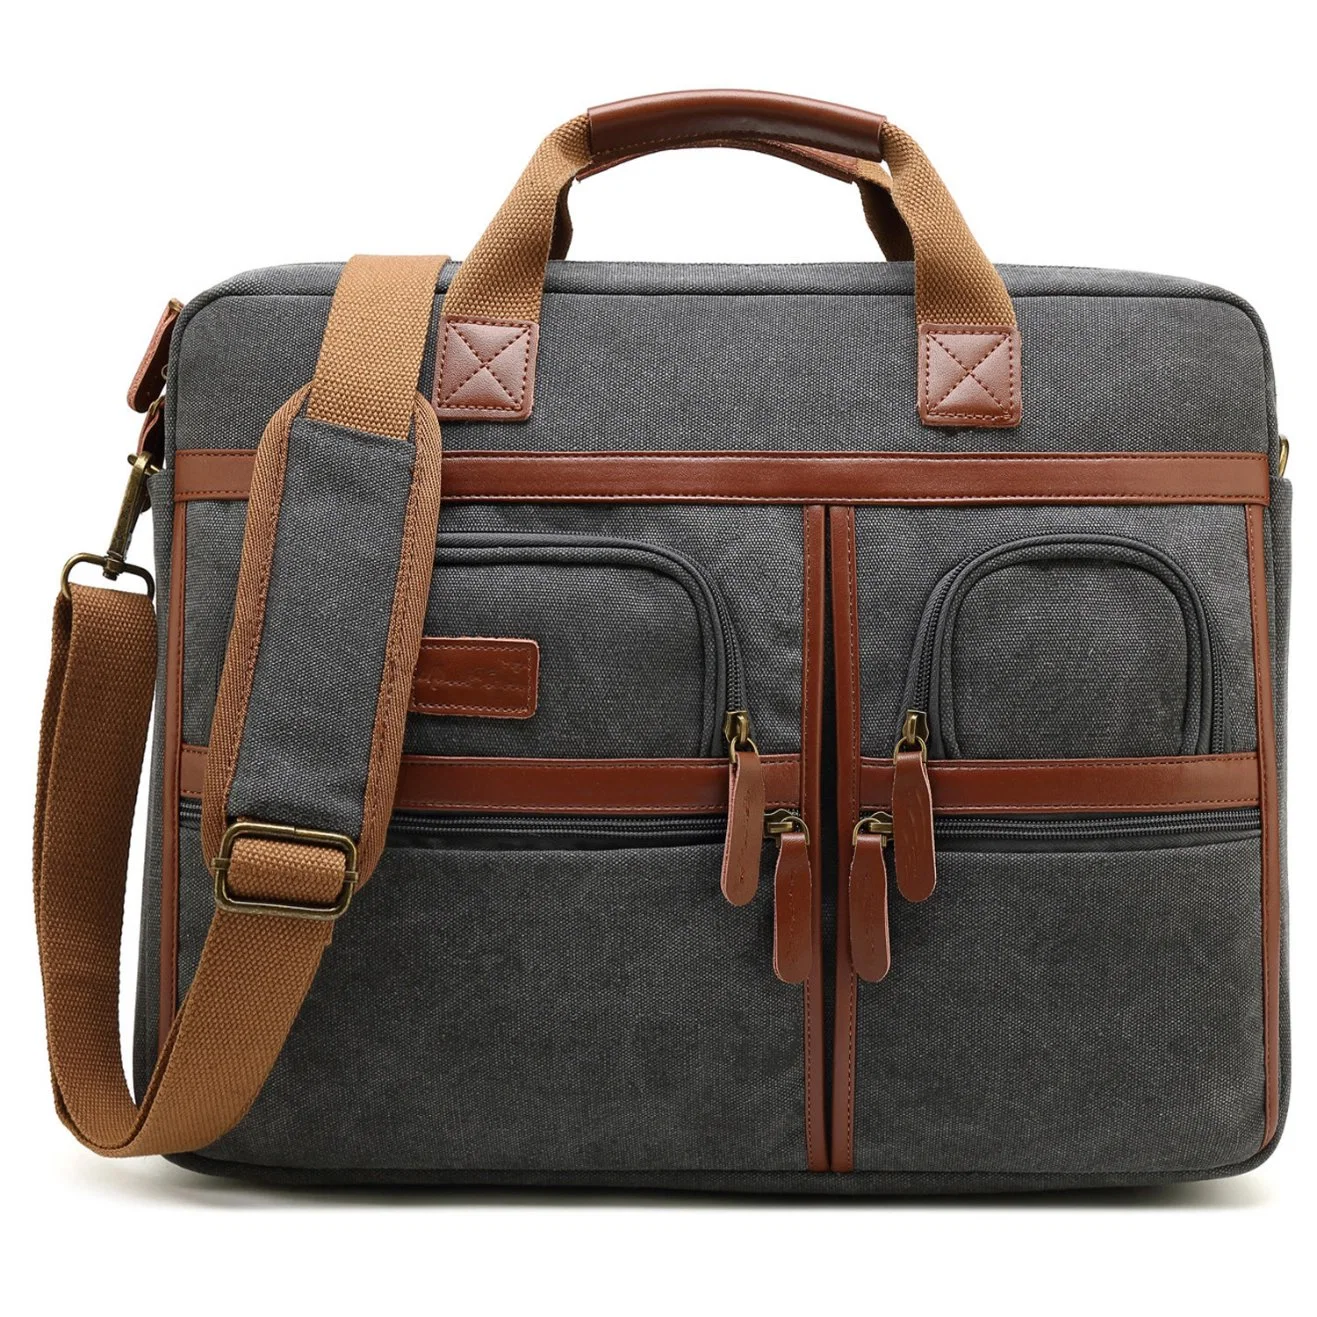 Amazon's New Laptop Bag Euramerican Fashion Laptop Bag Leisure Large Capacity Oblique Cross Package